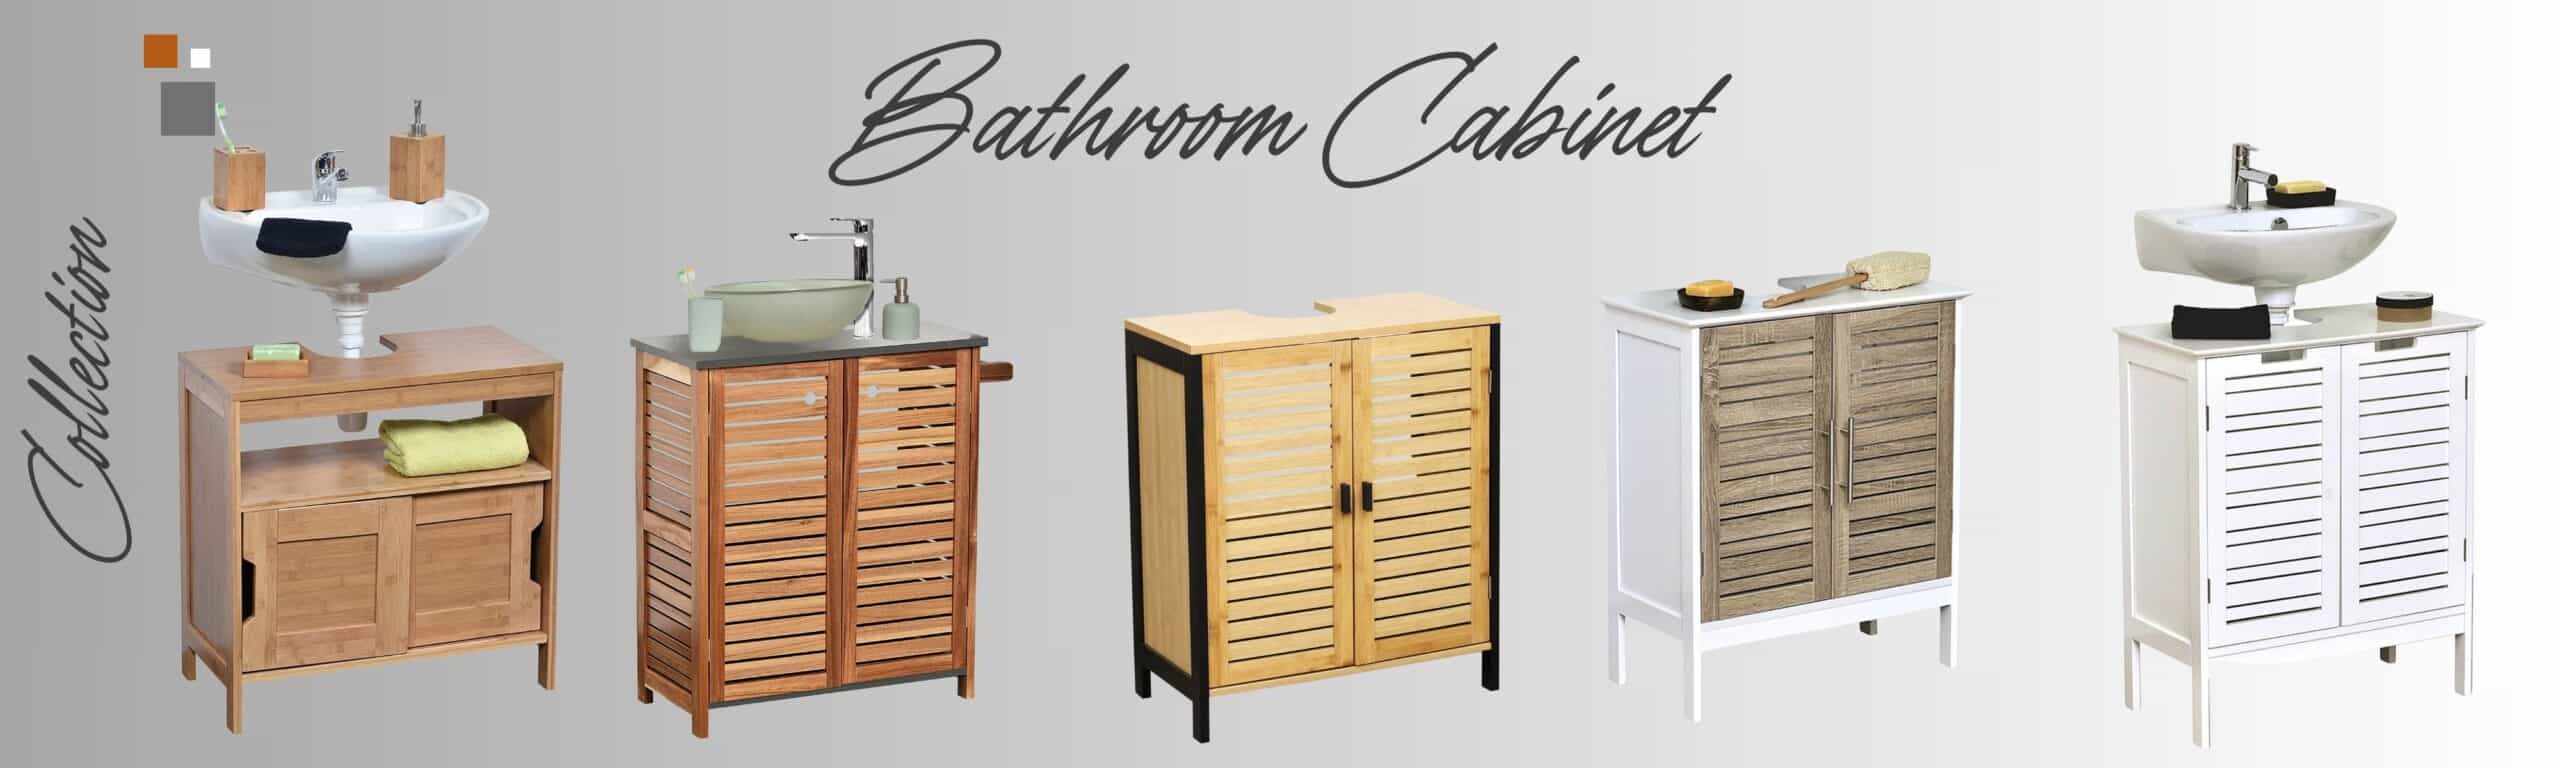 Evideco Wall-Mounted Sink Floor Cabinet Elements Acacia - Gray Wood